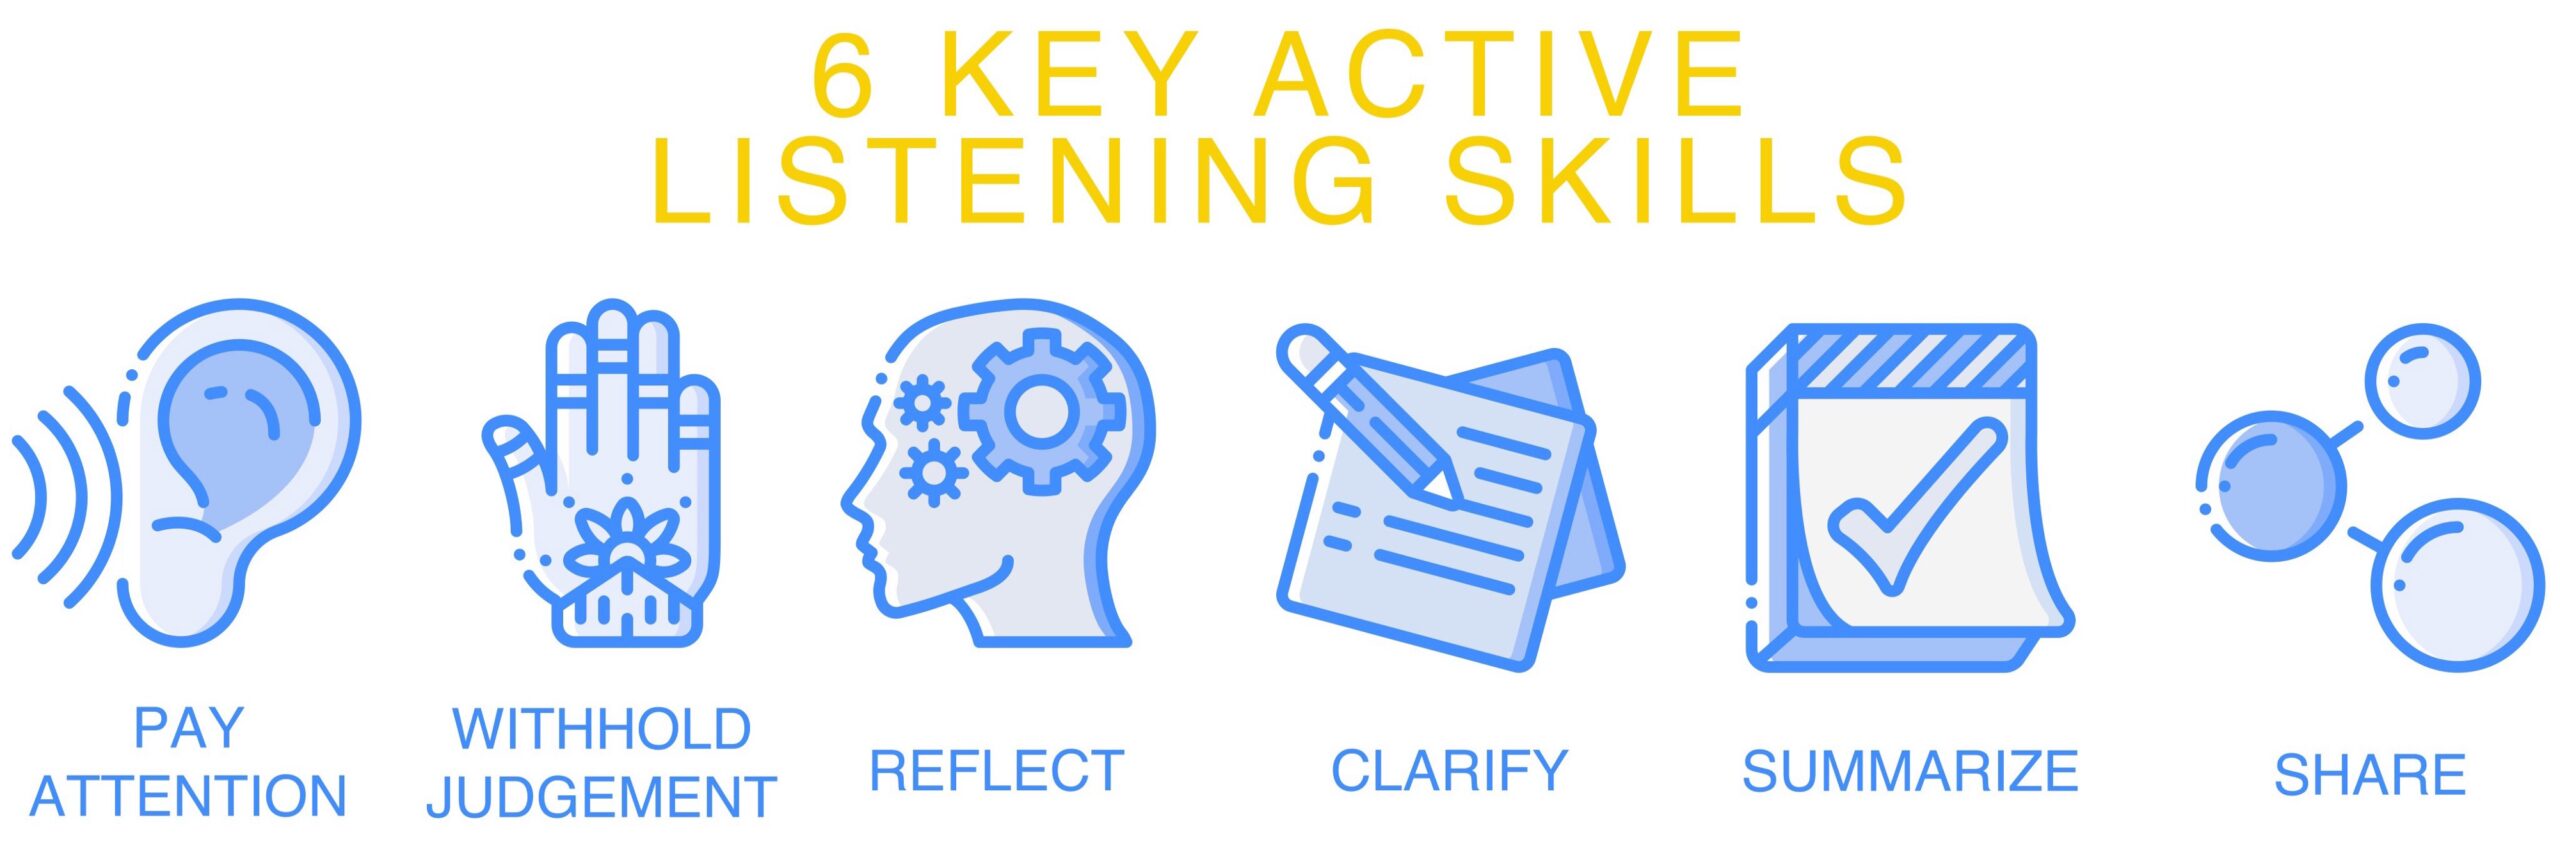 7 key active listening skills - jokerray